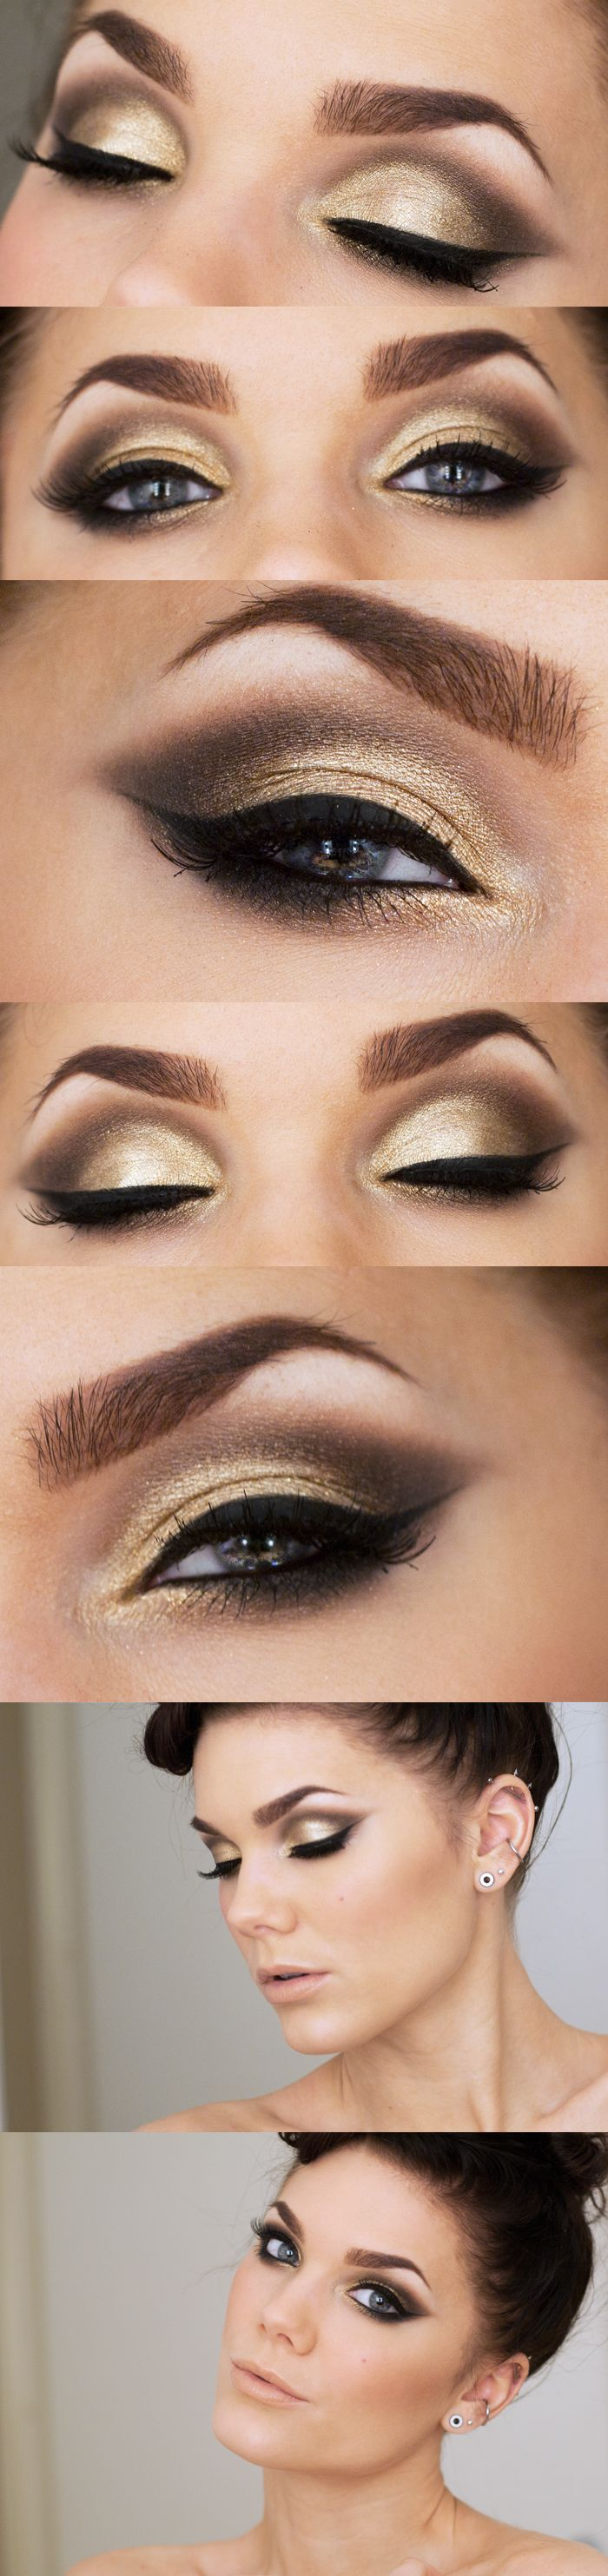 Smokey Eye Makeup For Hazel Eyes Gold And Black Smokey Eye Tutorials Best Gold And Black Eye Shadow